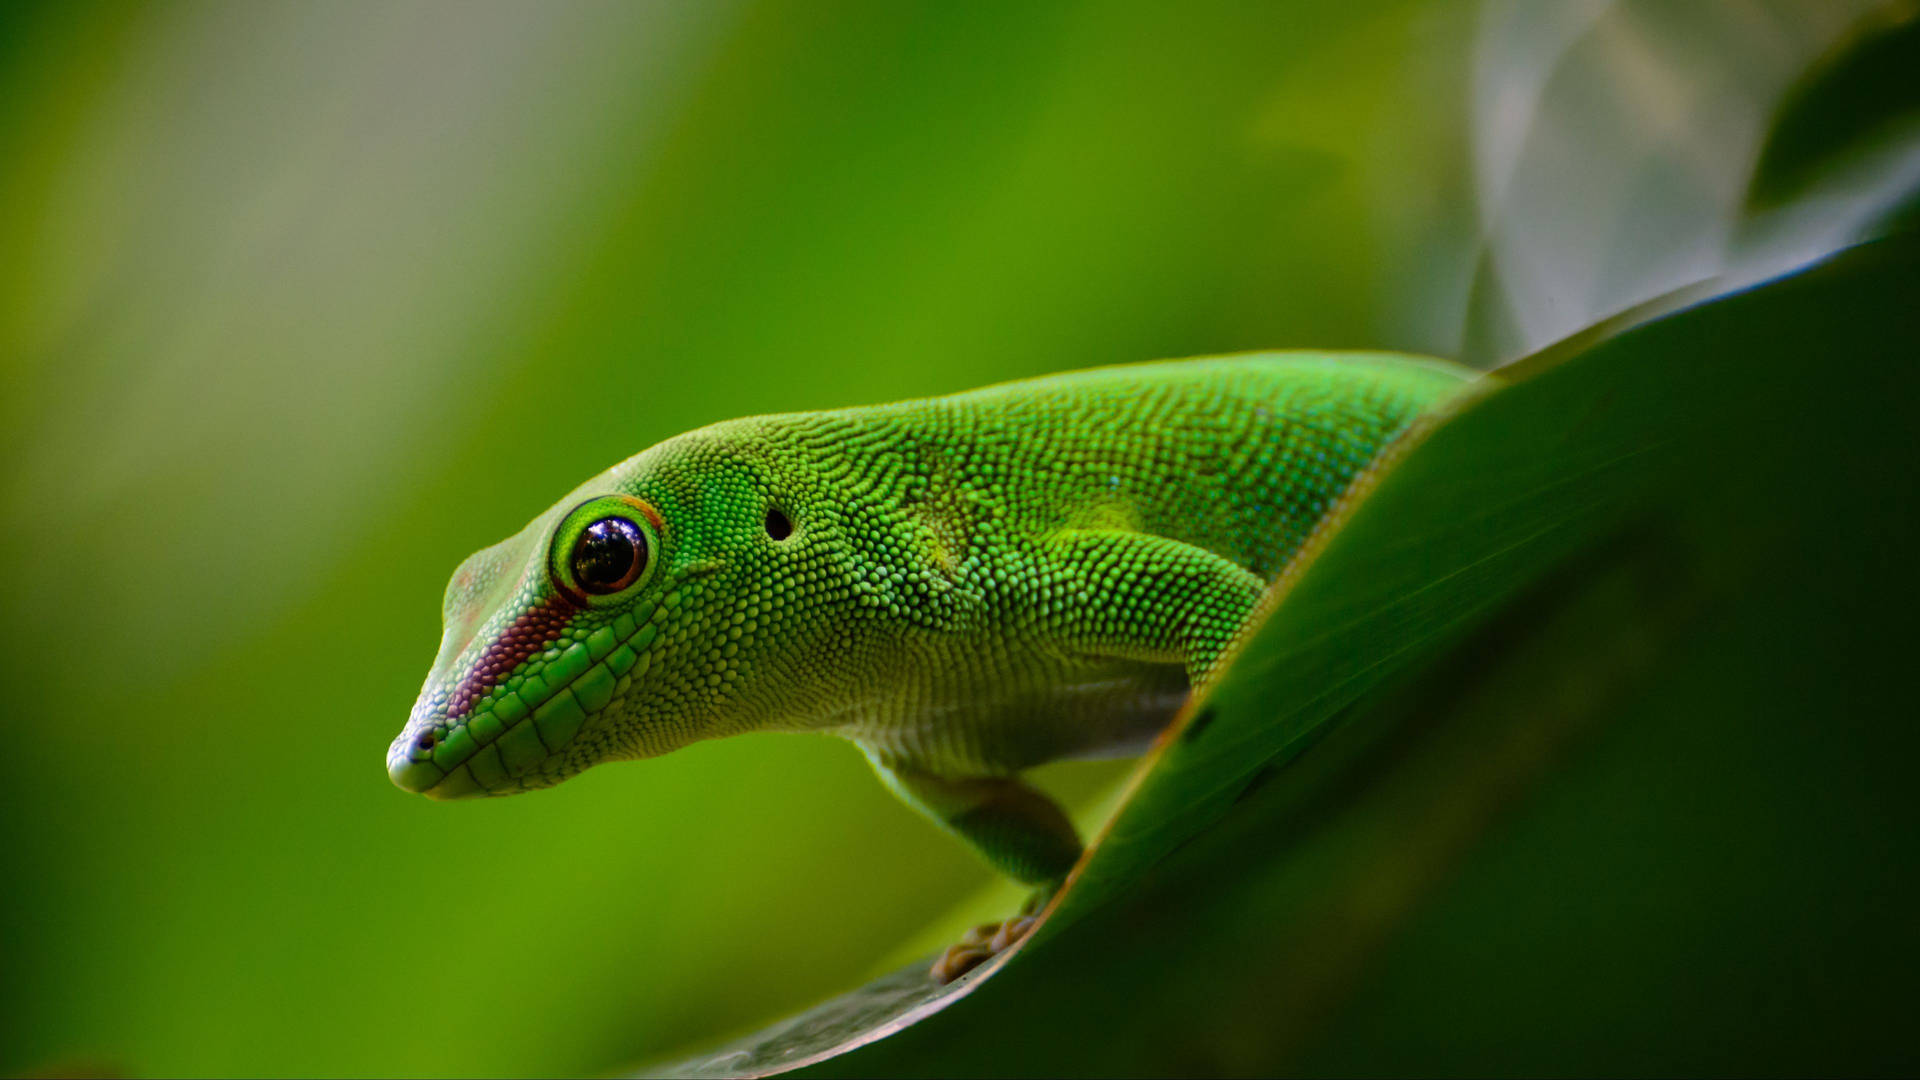 Green Gecko On Green Leaf Background